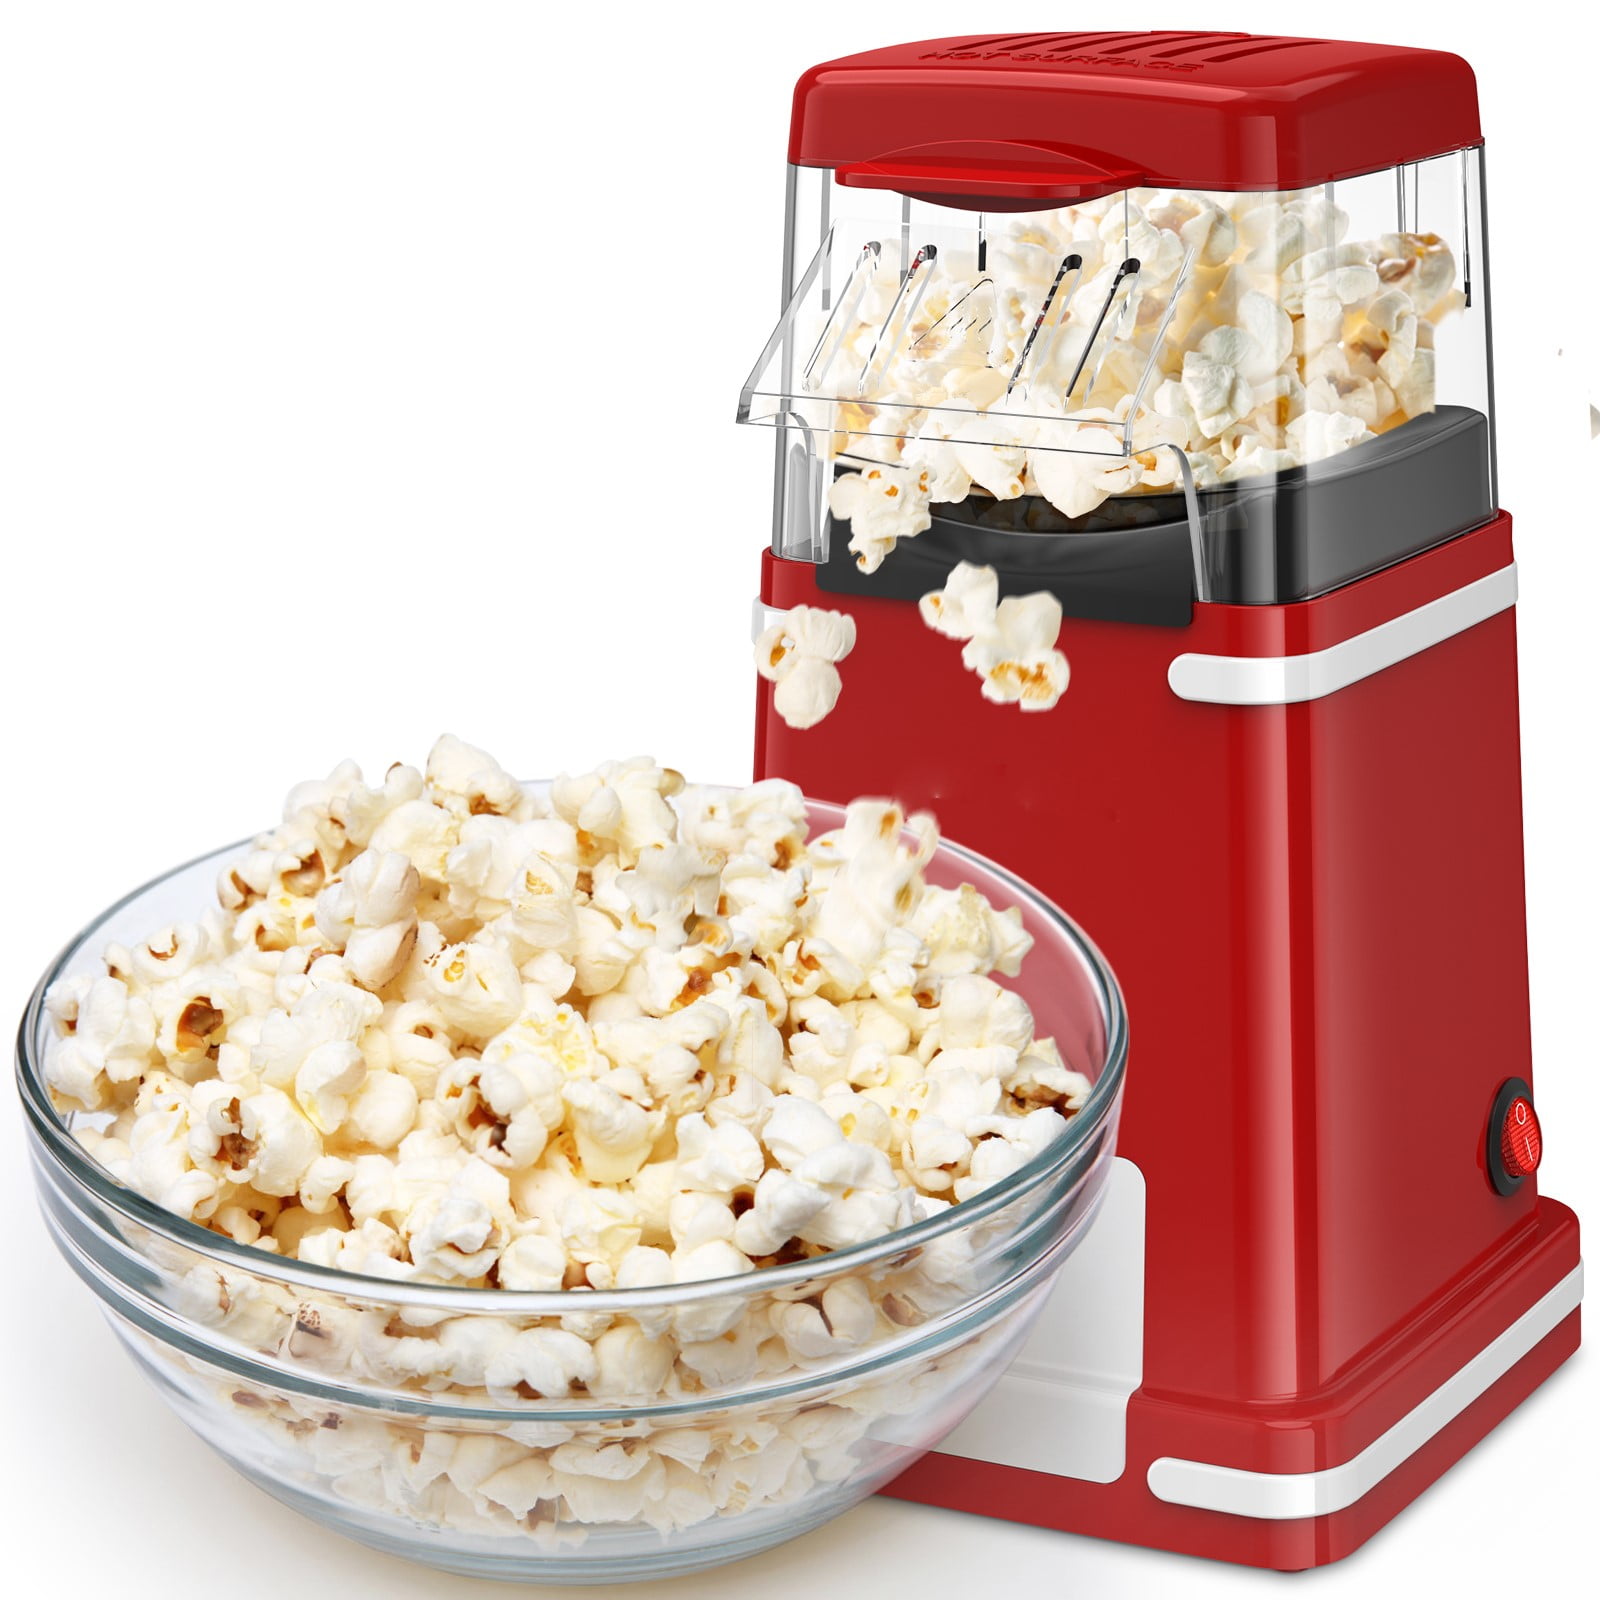 Hirifull hot air popcorn maker, household popcorn maker, no oils, black